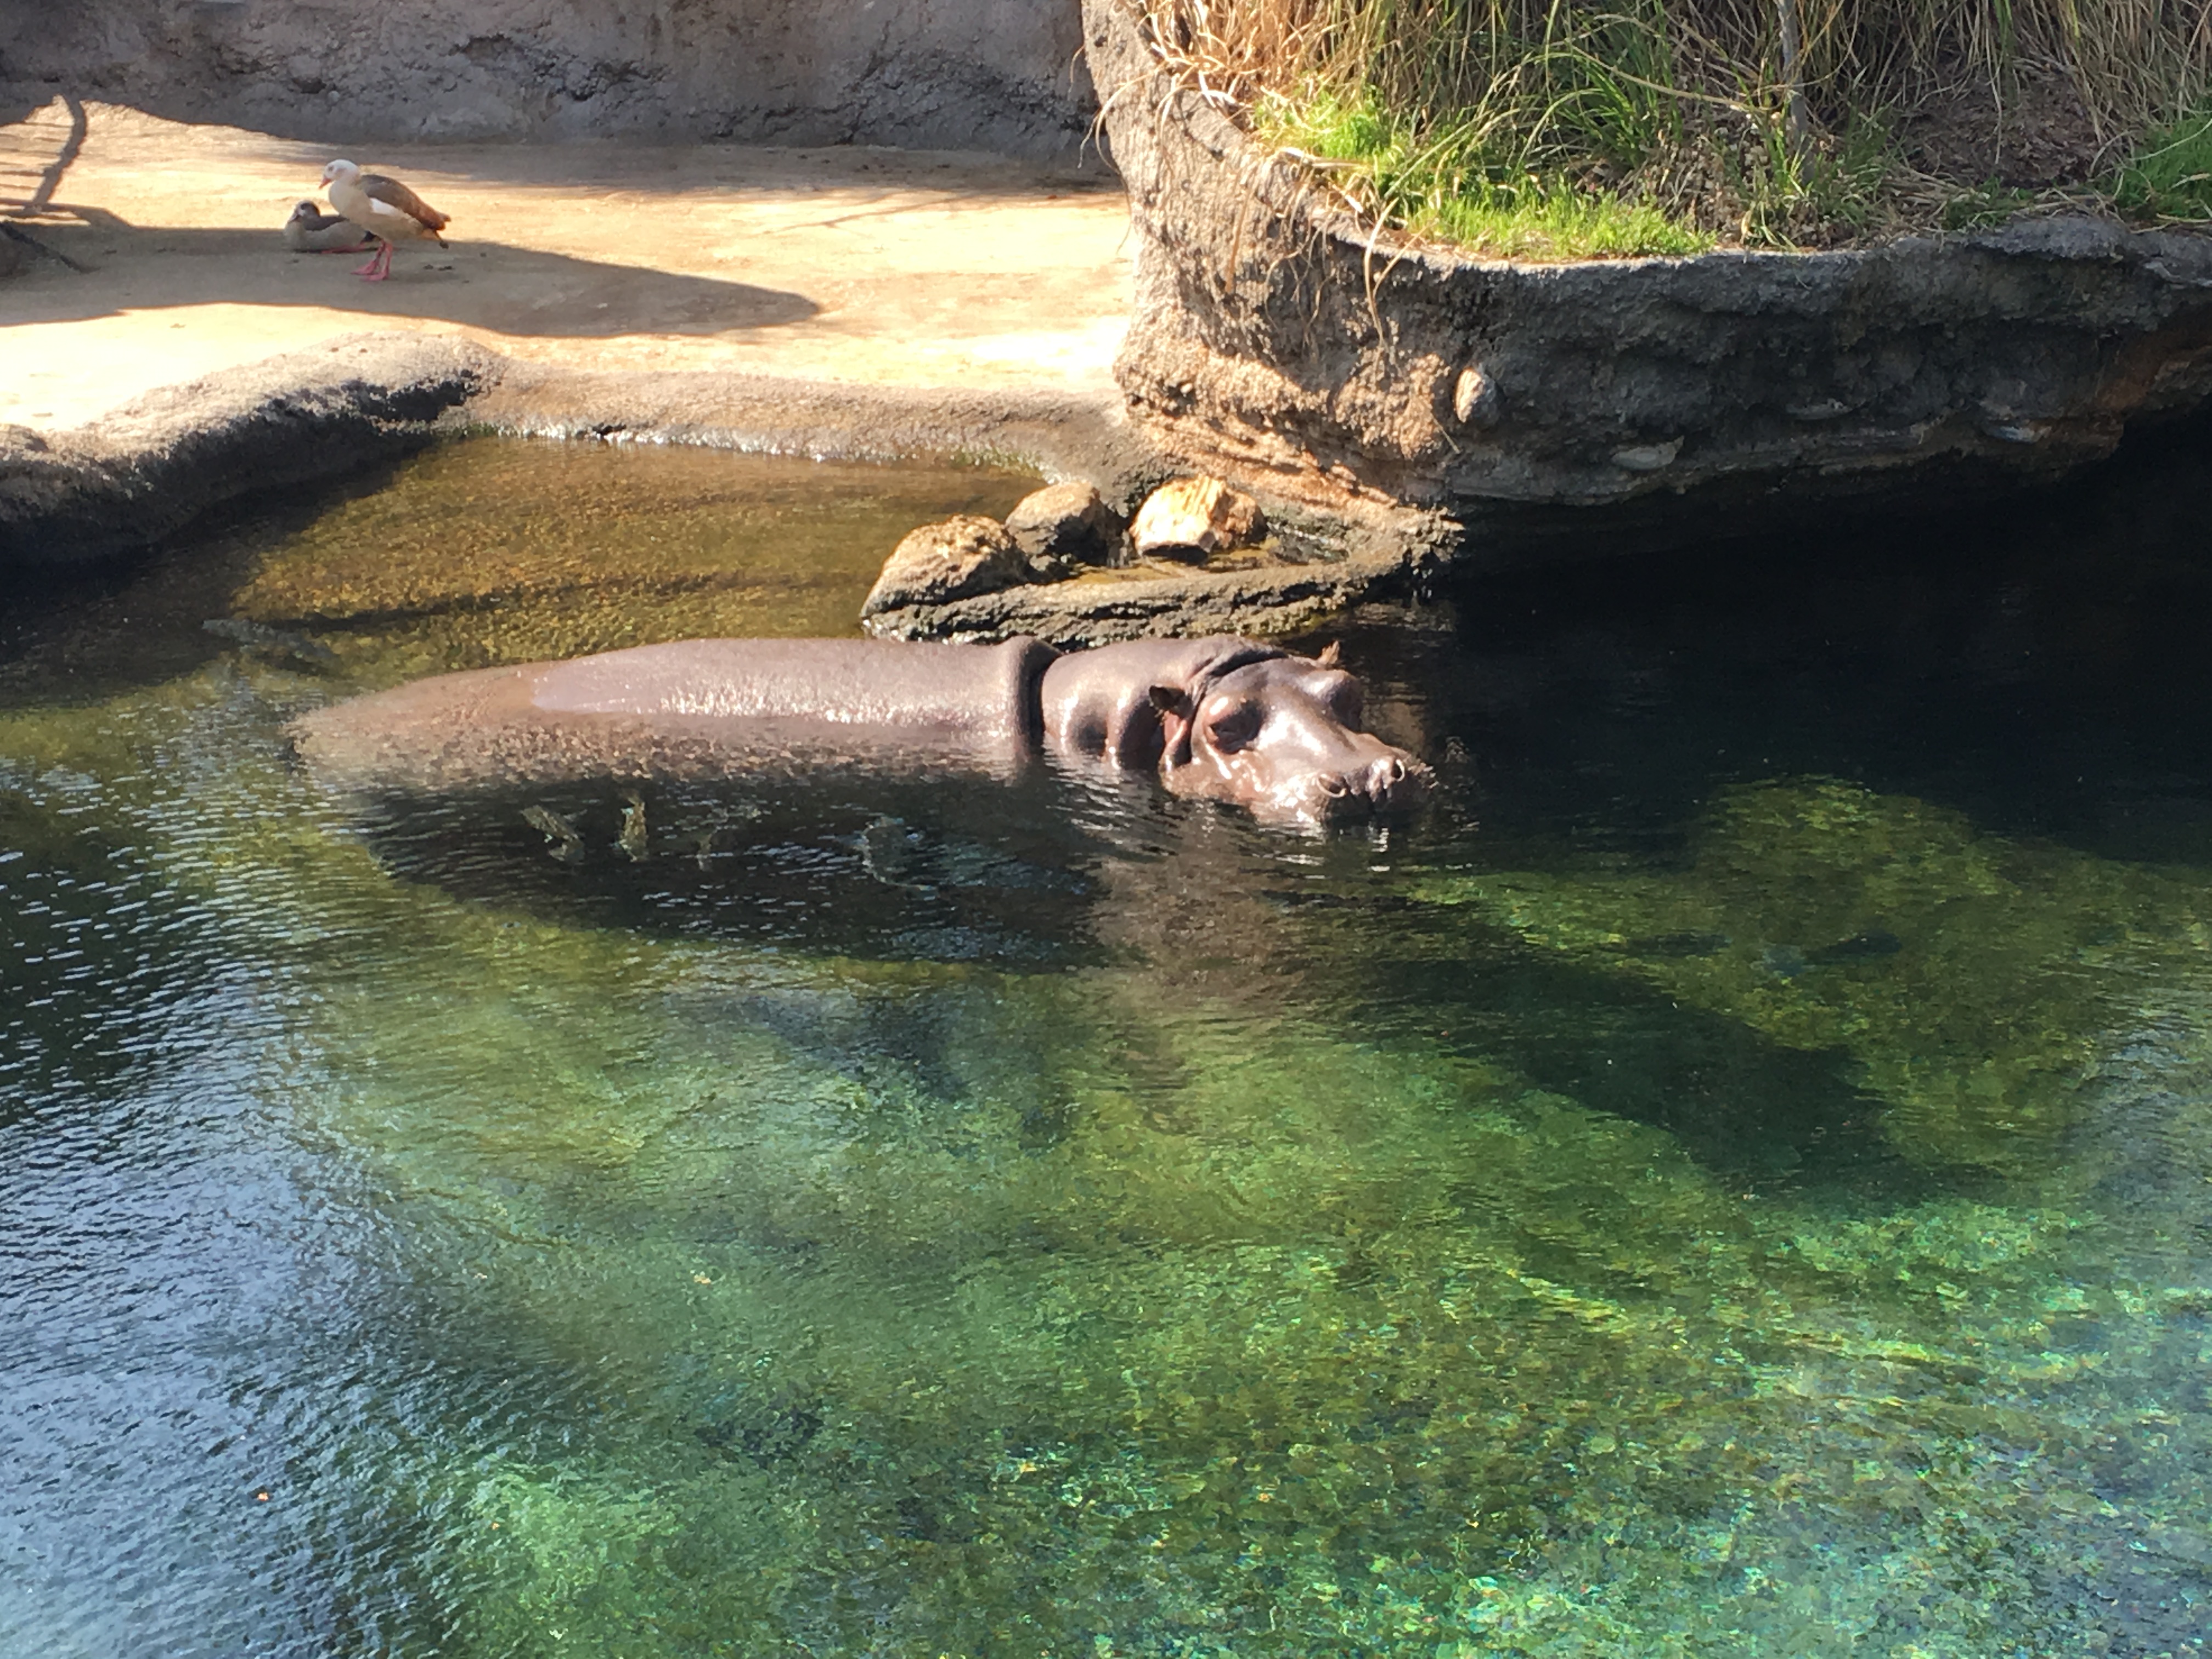 Hippopotamus relaxing in pool at Tennoji Zoo